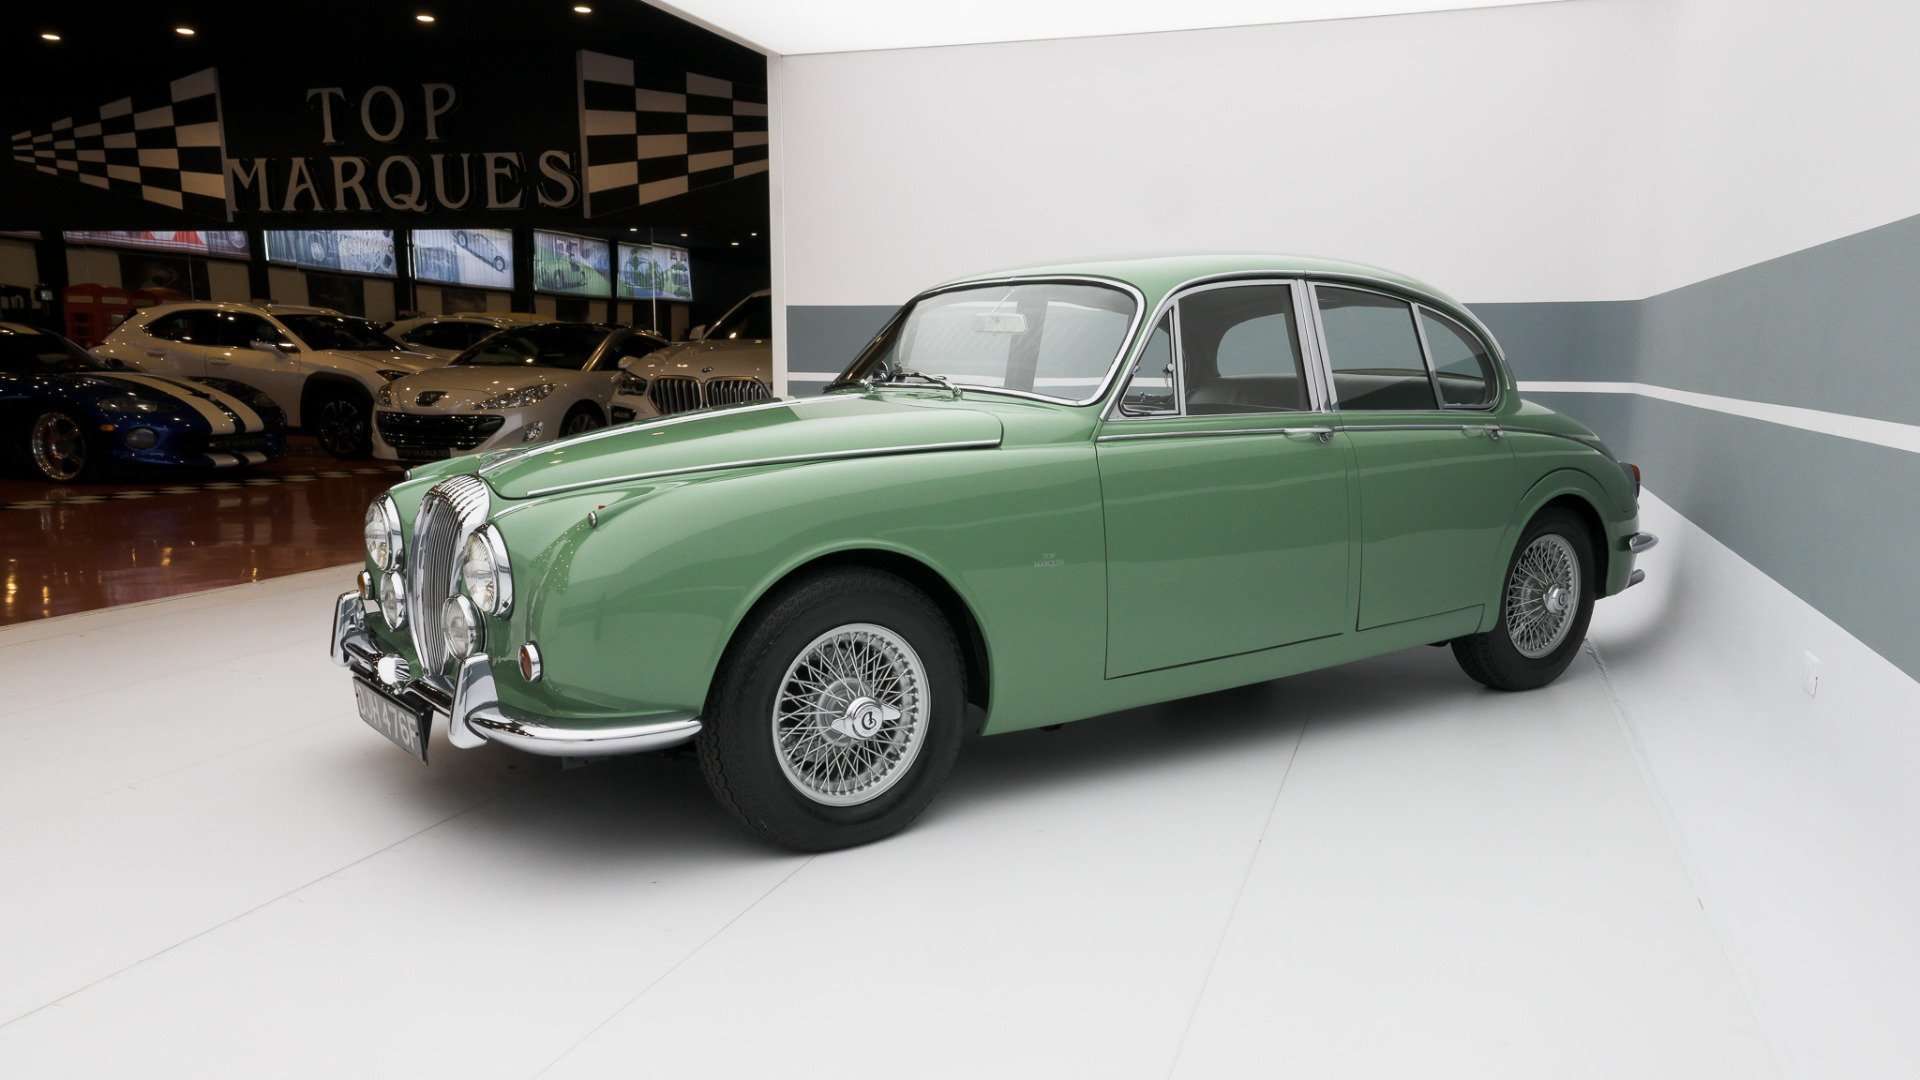 Daimler Sovereign Sedan in Green used in Bassano del Grappa - Vicenza - Vi for € 29,900.-